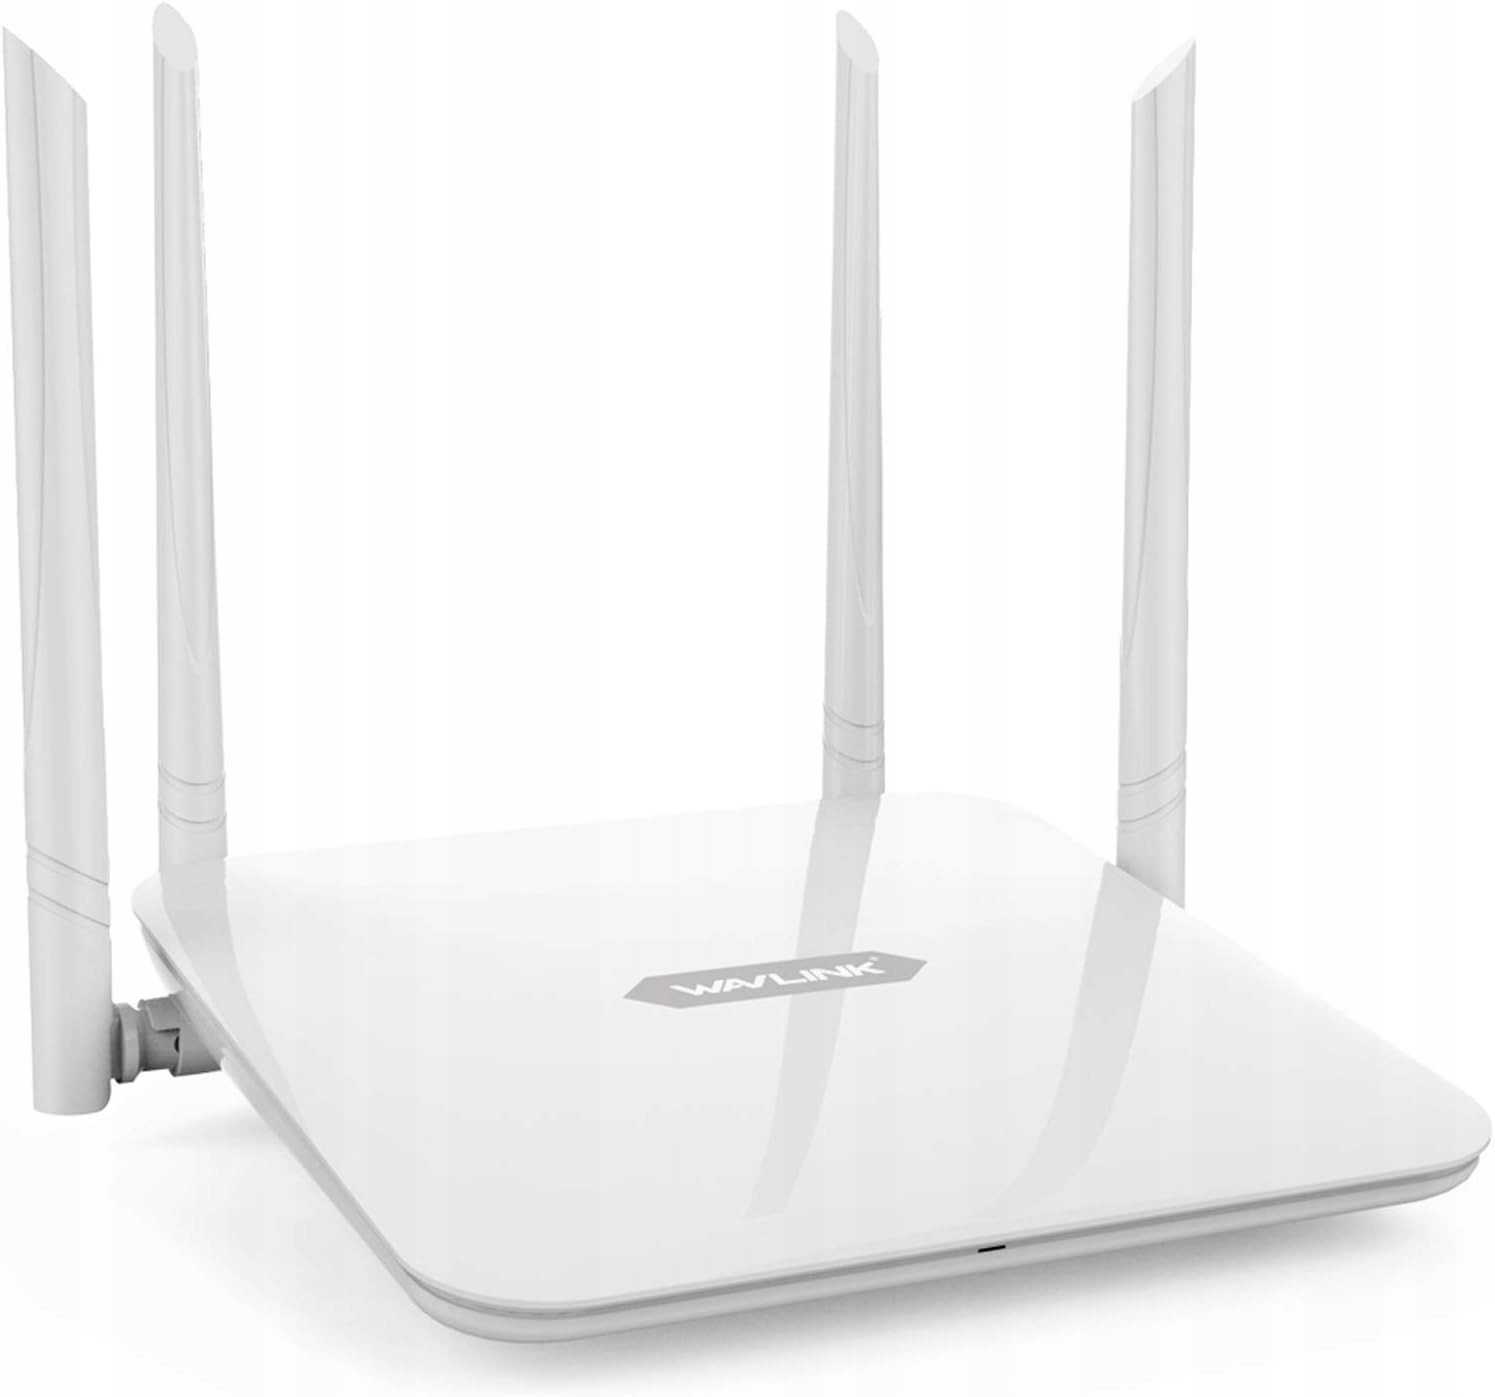 Wavlink Aerial G AC1200 bezdrátový Wi-Fi router